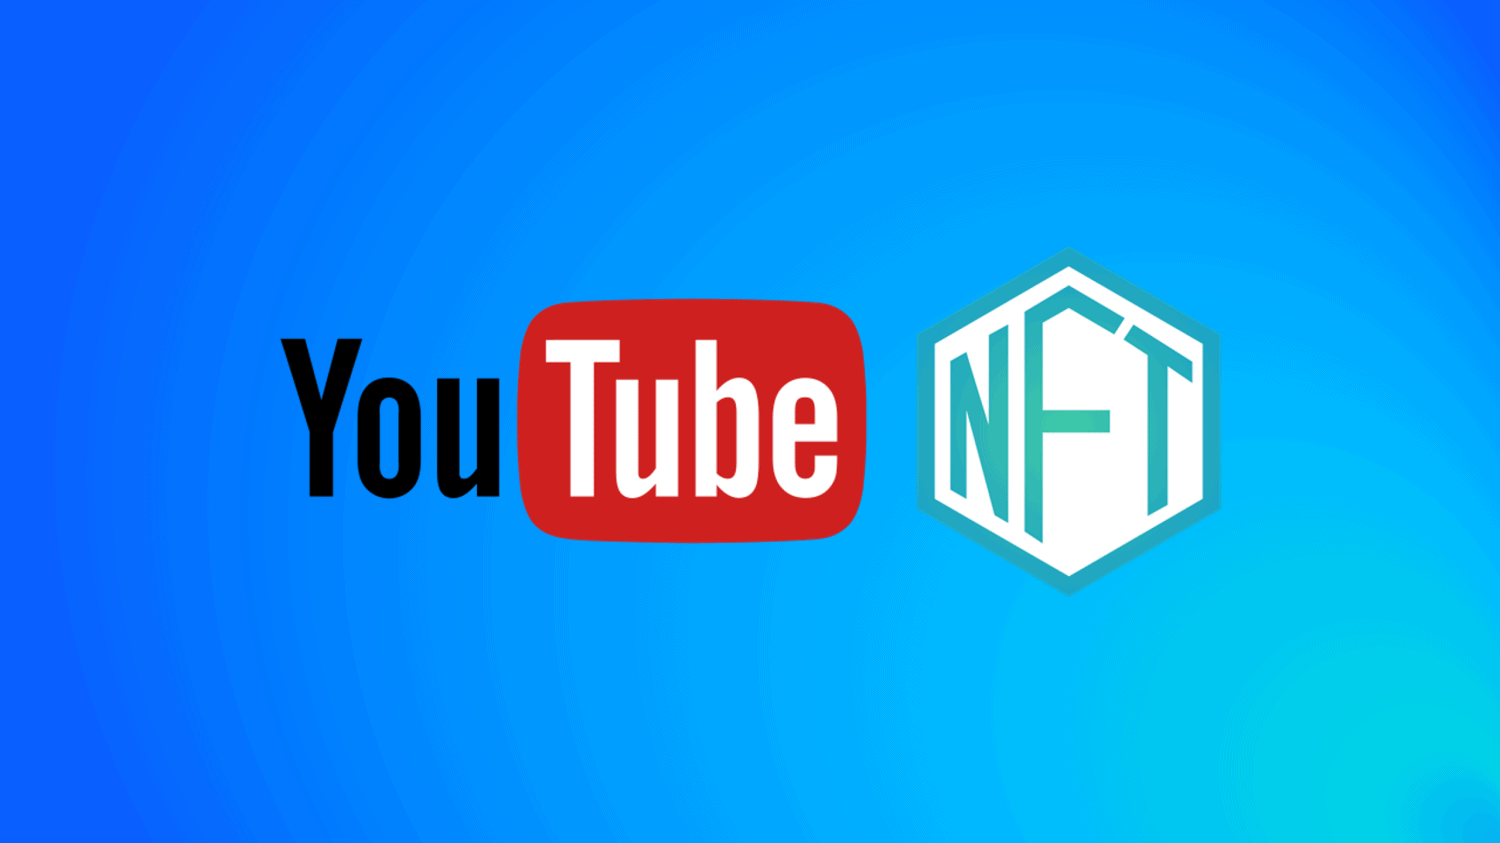 Blog - YouTube NFT